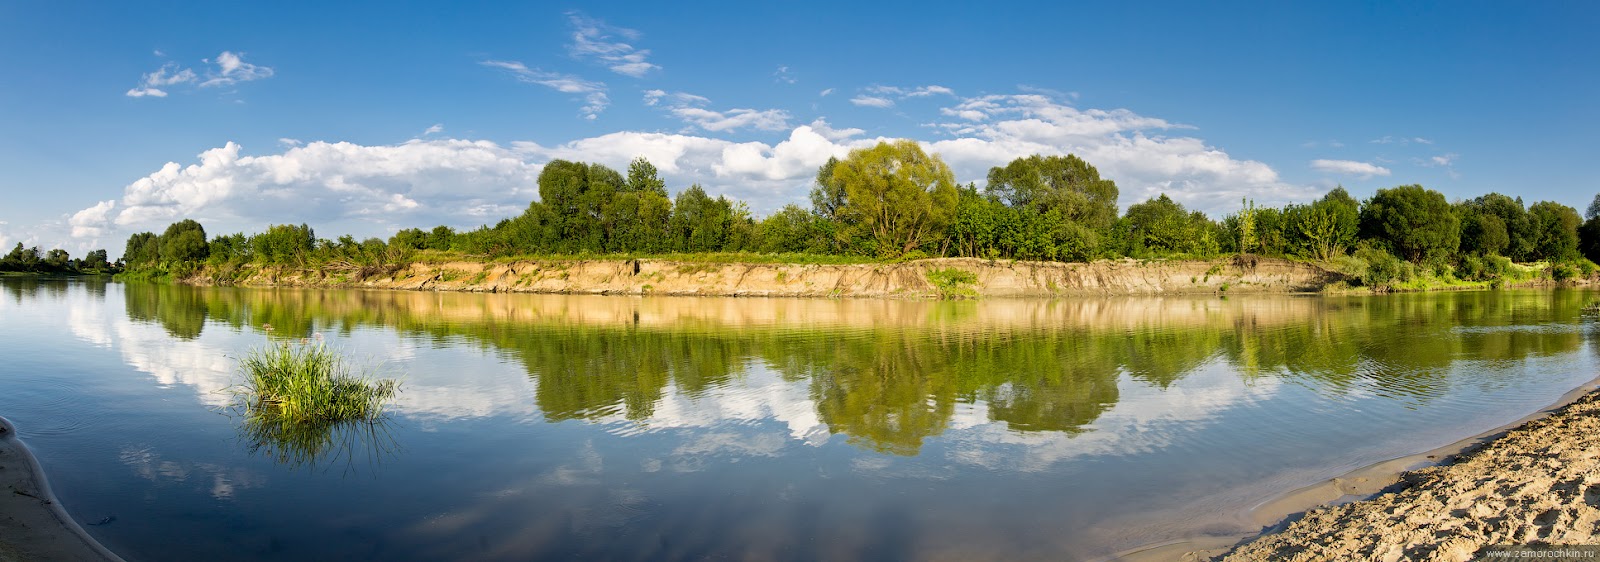 Панорама берега реки Мокша | Panorama of the river Moksha